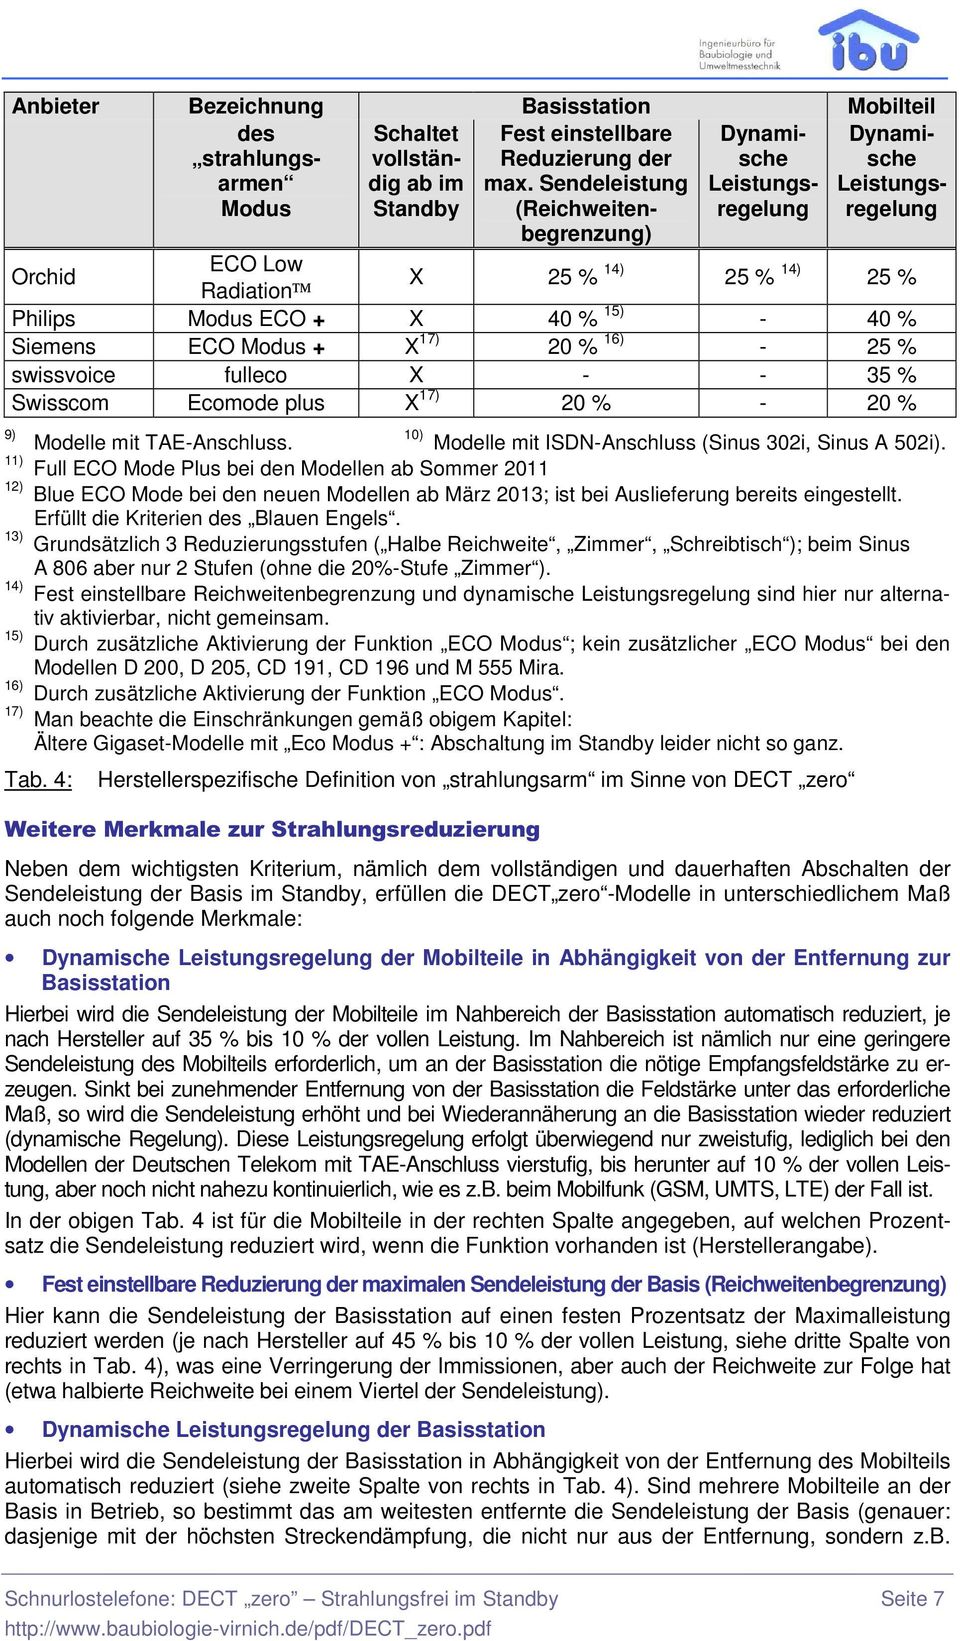 1) - 2 % swissvoice fulleco - - 3 % Swisscom Ecomode plus 17) 20 % - 20 % 9) Modelle mit TAE-Anschluss. 10) Modelle mit ISN-Anschluss (Sinus 302i, Sinus A 02i).